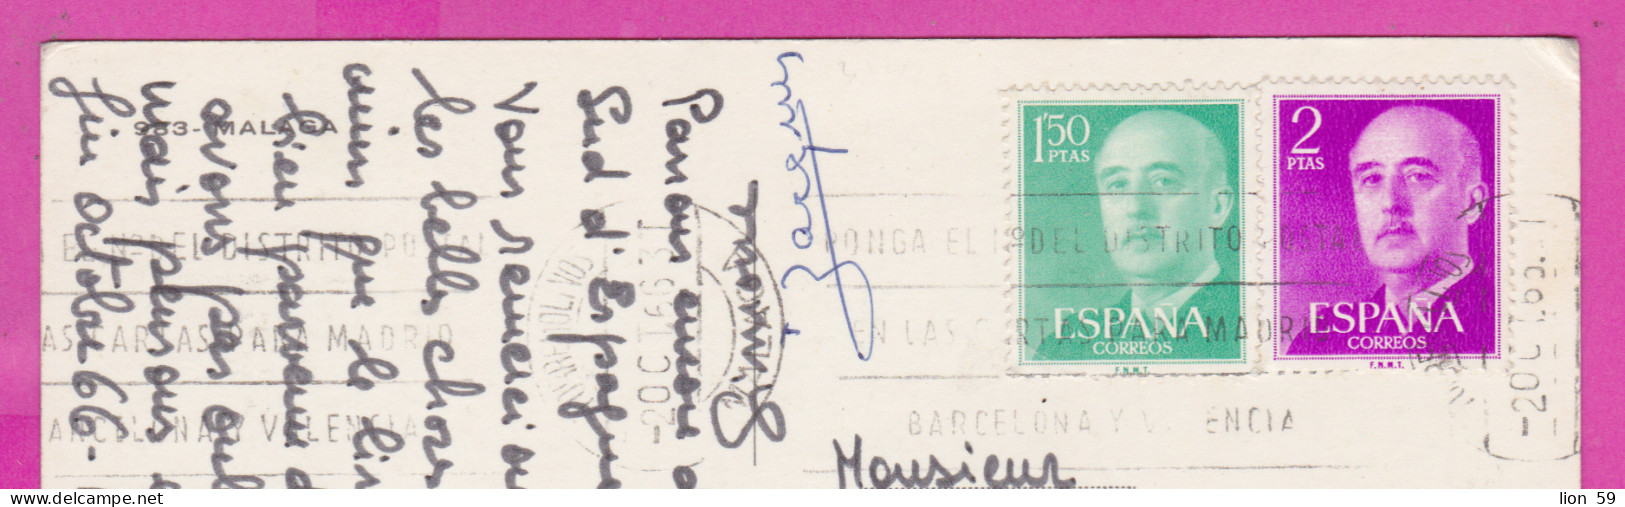 293811 / Spain - Malaga PC 1966 USED 1.50+2 PtaGeneral Francisco Franco Flamme " PONGA No. DISTRITO POSTAL.... - Briefe U. Dokumente